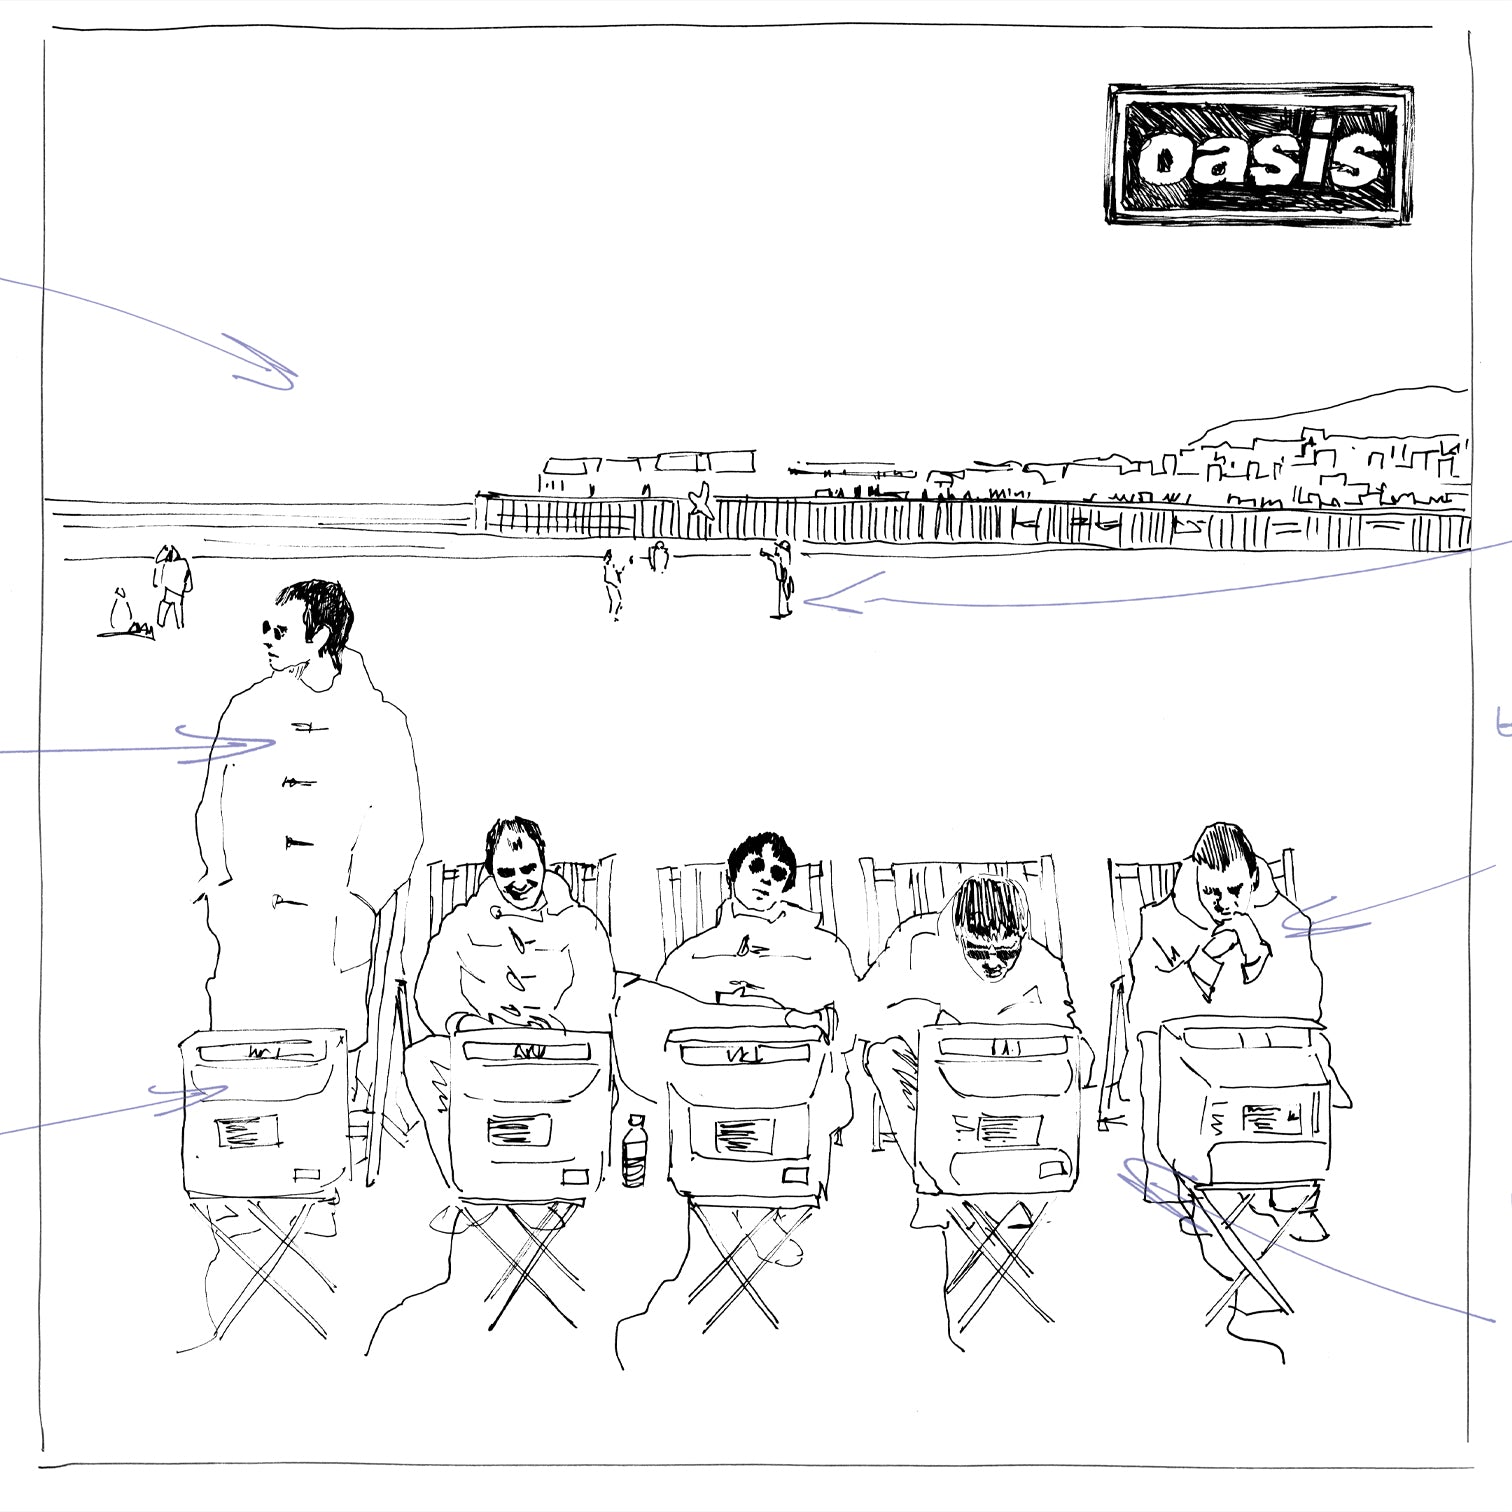 Oasis - Roll With It - Ltd Edition Illustration Print - New Item